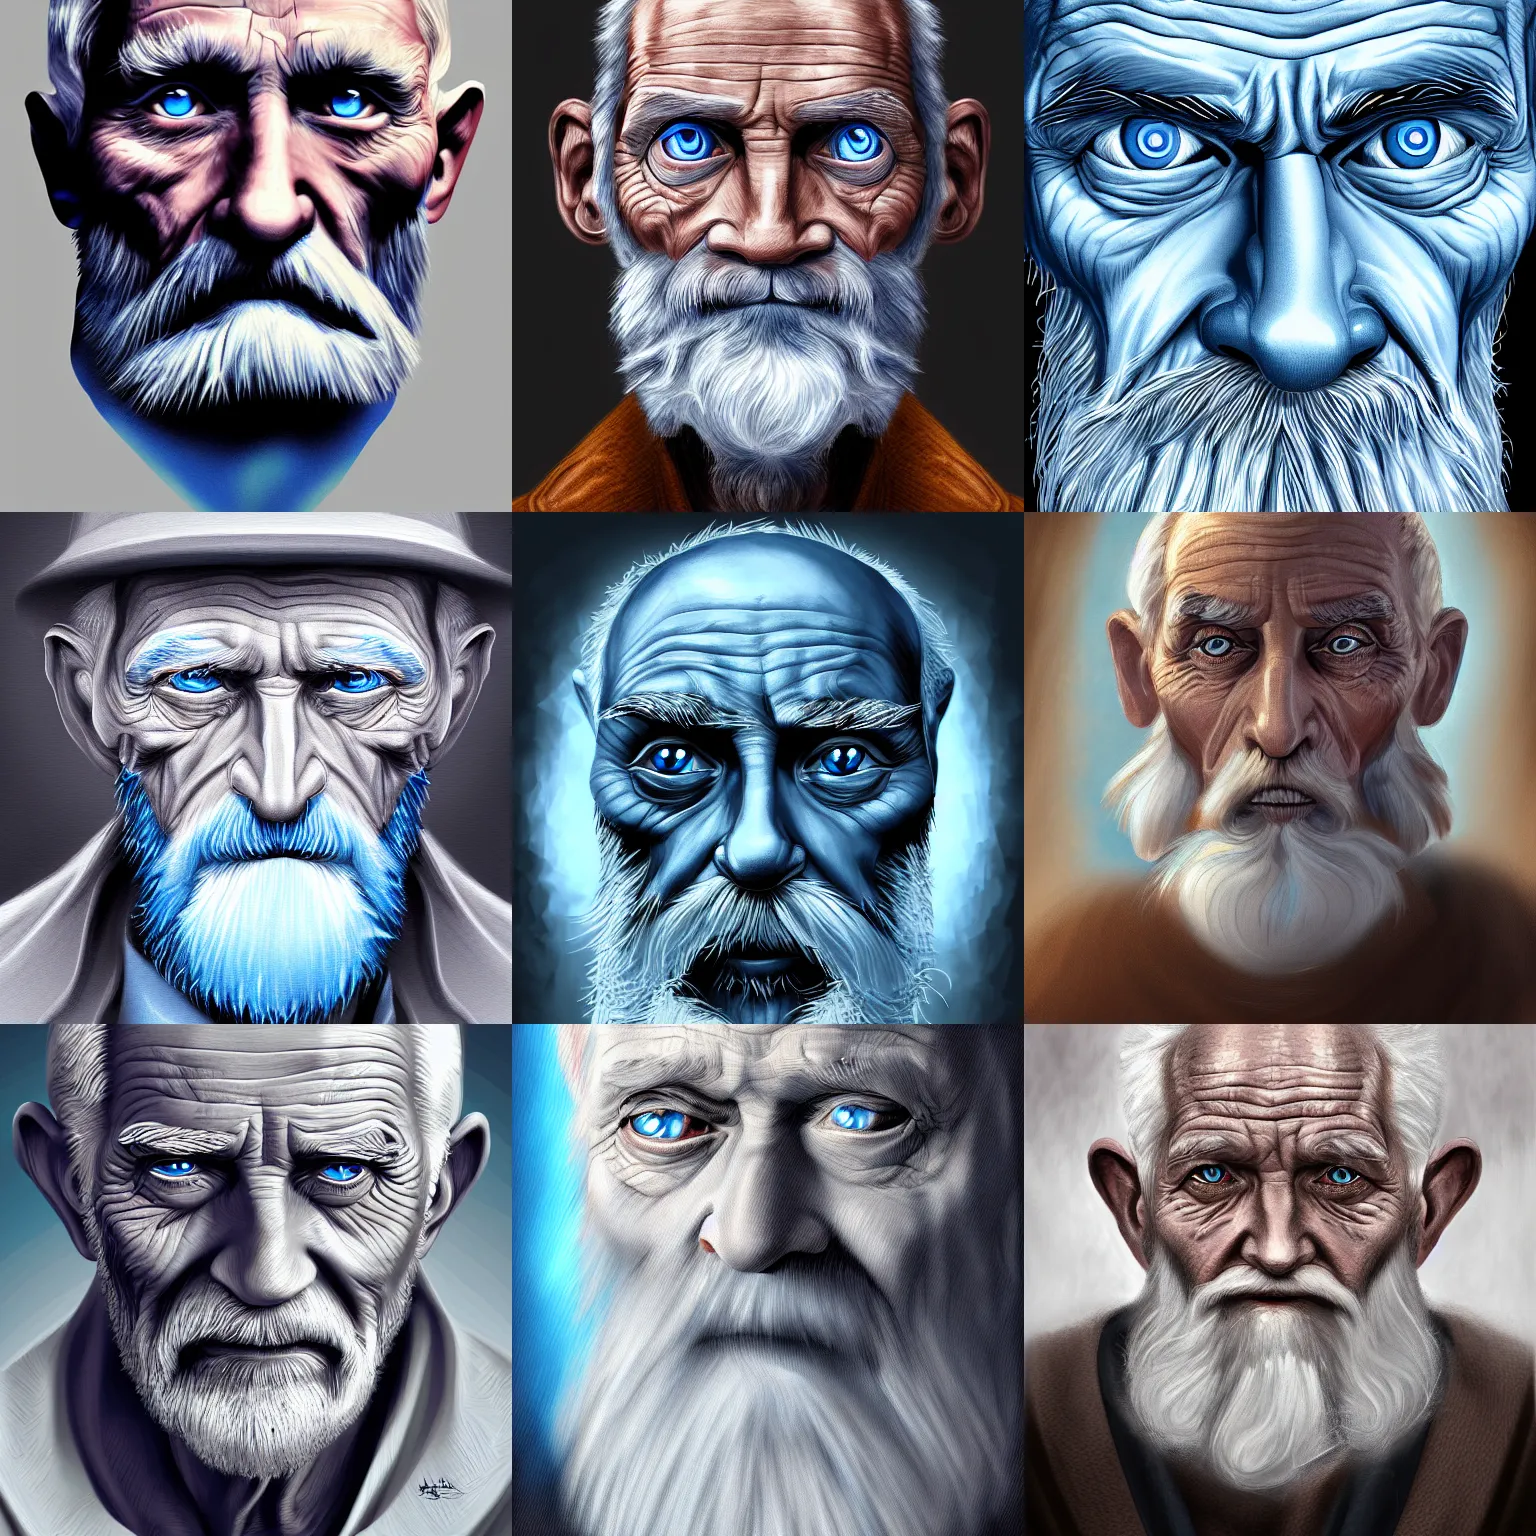 Prompt: Old man blue eyes mighty looking, digital painting, lots of details, 4k, intricate